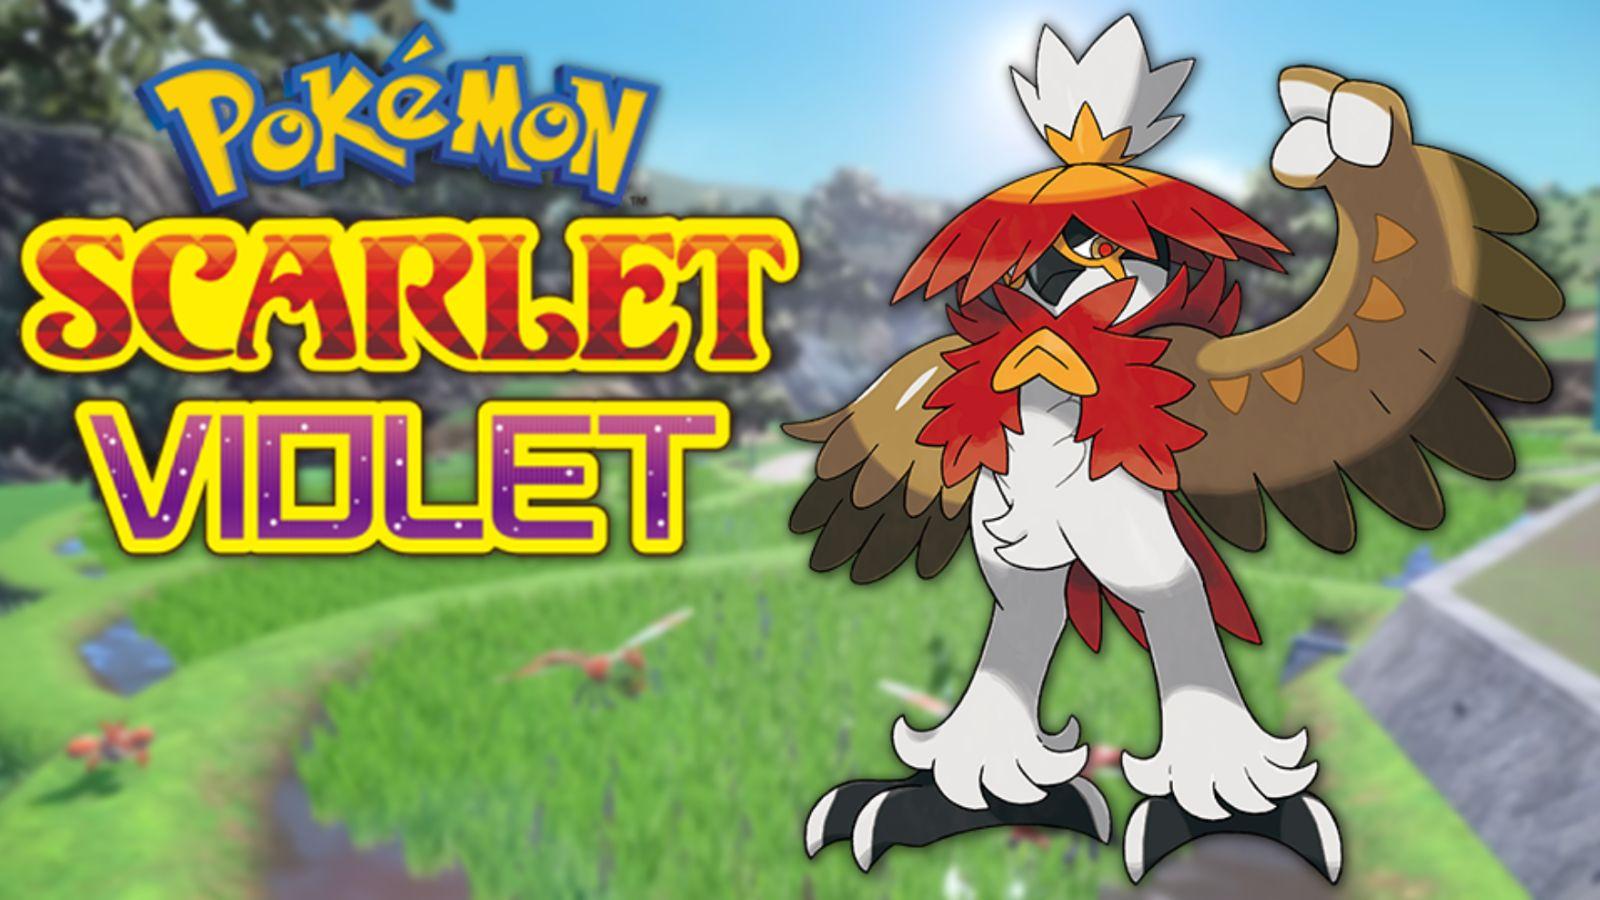 Serebii.net on X: Serebii Update: The Pokémon Scarlet & Violet Mighty  Hisuian Decidueye Tera Raid Battle Event has begun its second run. Runs  until October 15th at 23:59 UTC Full details @